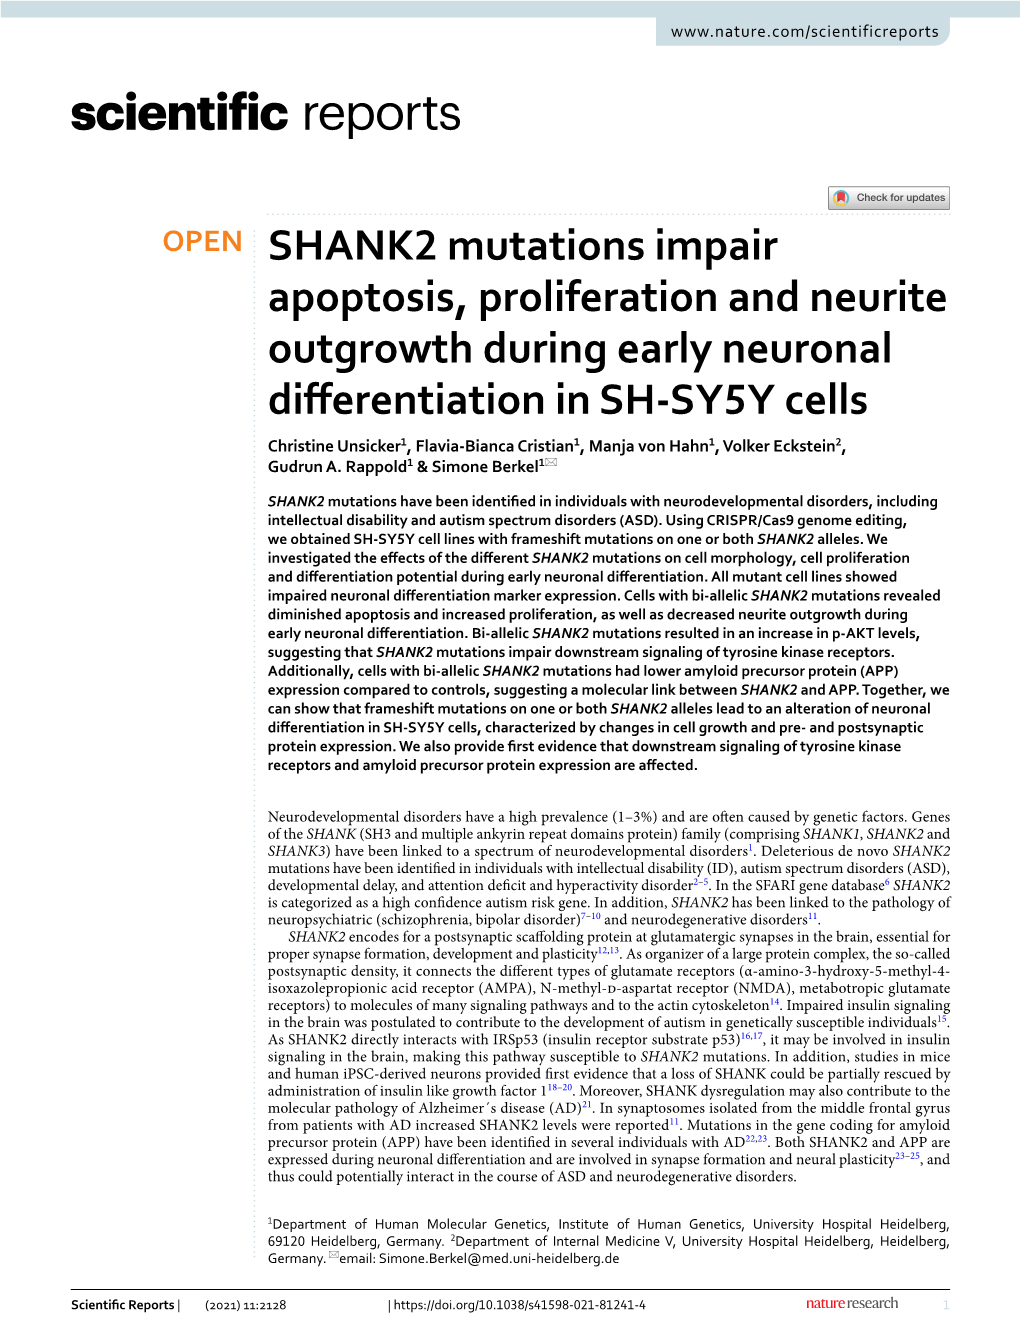 SHANK2 Mutations Impair Apoptosis, Proliferation and Neurite Outgrowth